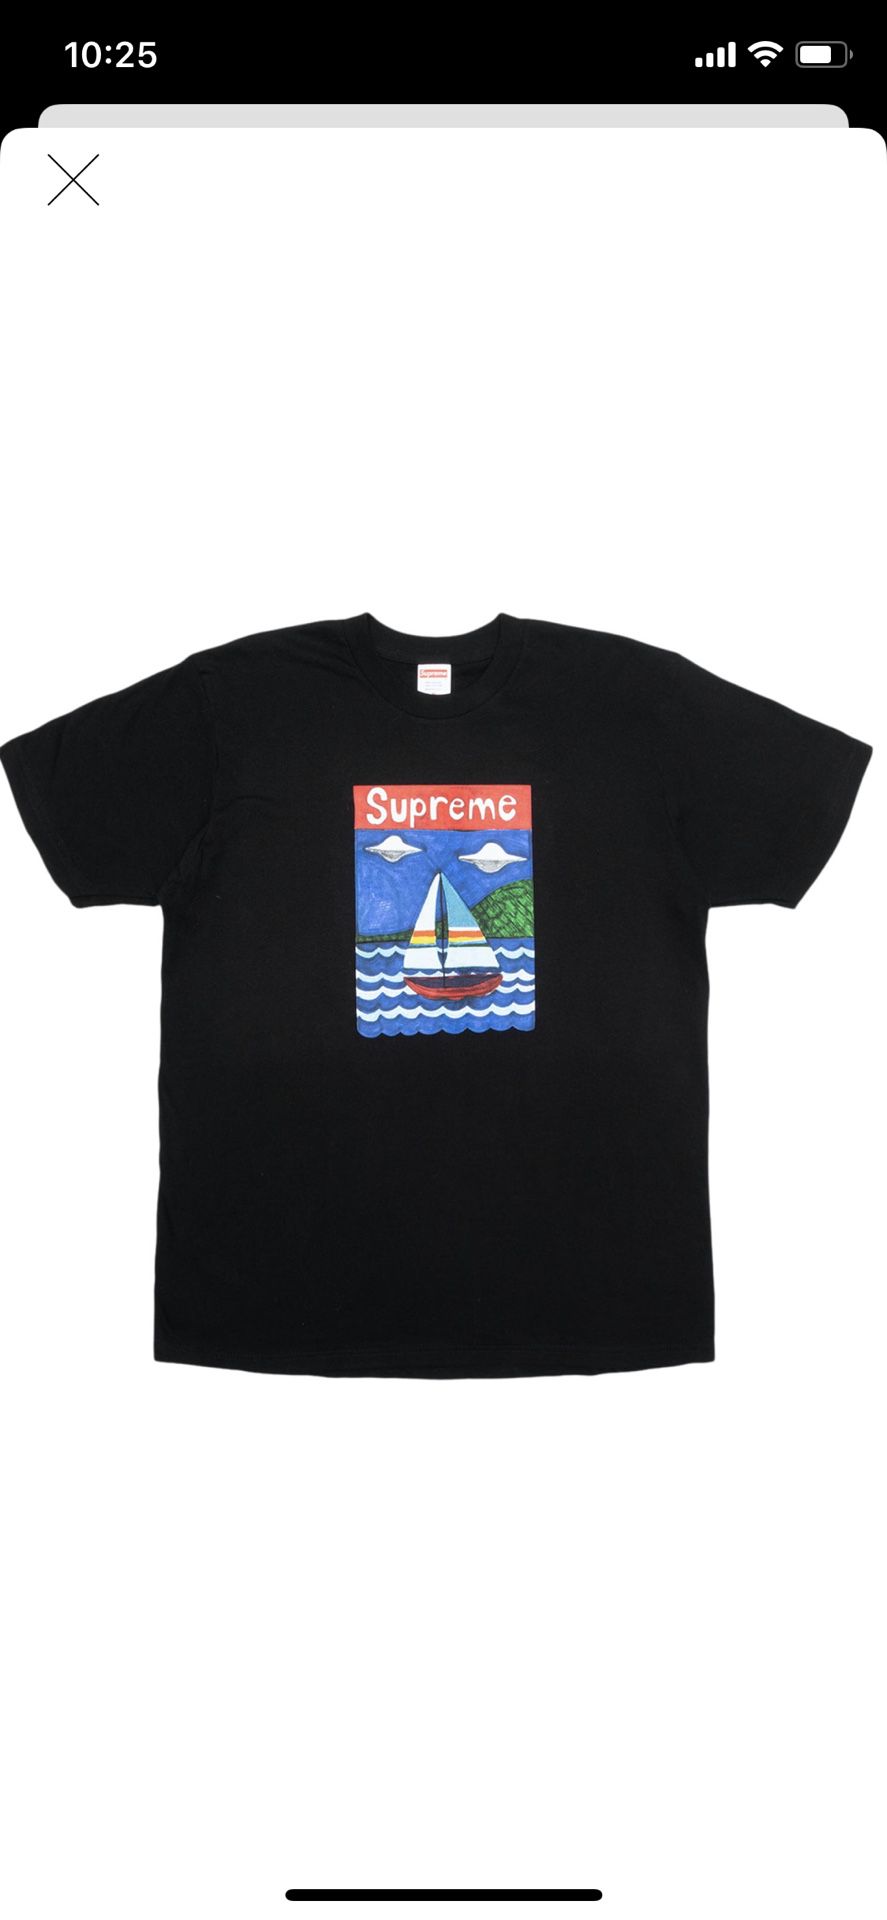 Supreme sail boat tee black large DS